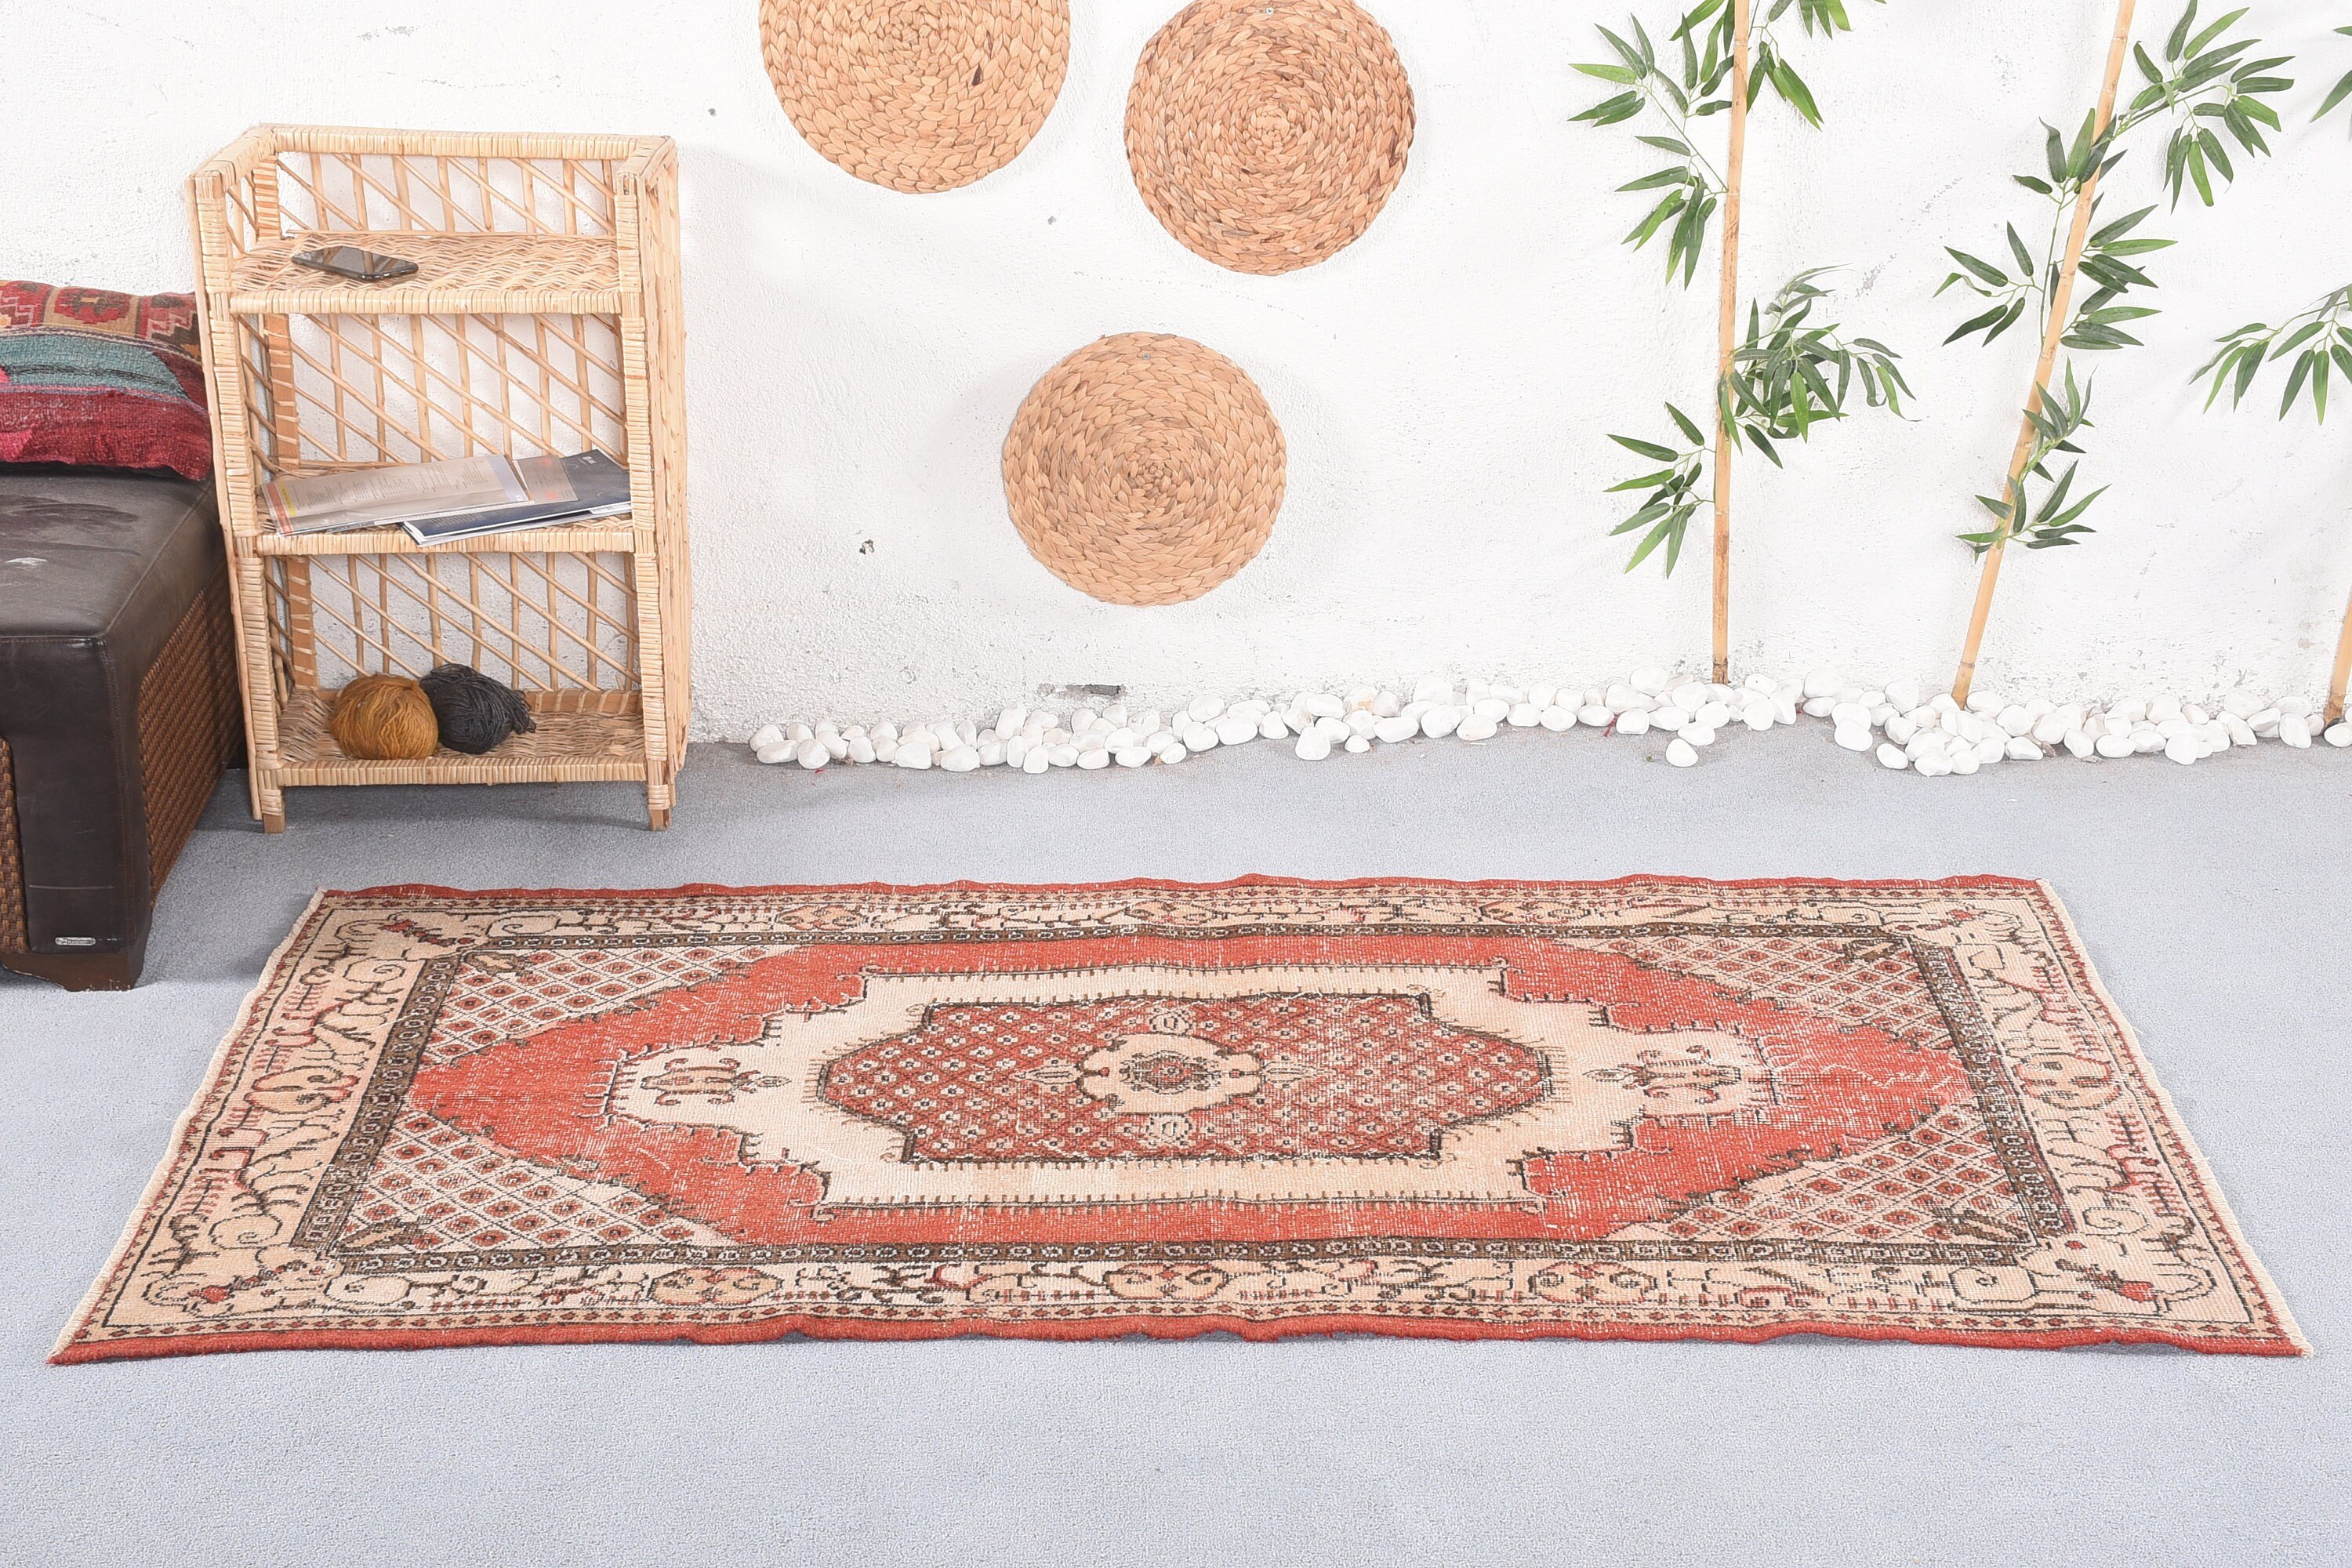 Turkish Rug, Kitchen Rug, Floor Rug, Orange  3.8x6.6 ft Area Rug, Indoor Rug, Vintage Rug, Rugs for Nursery, Antique Rug